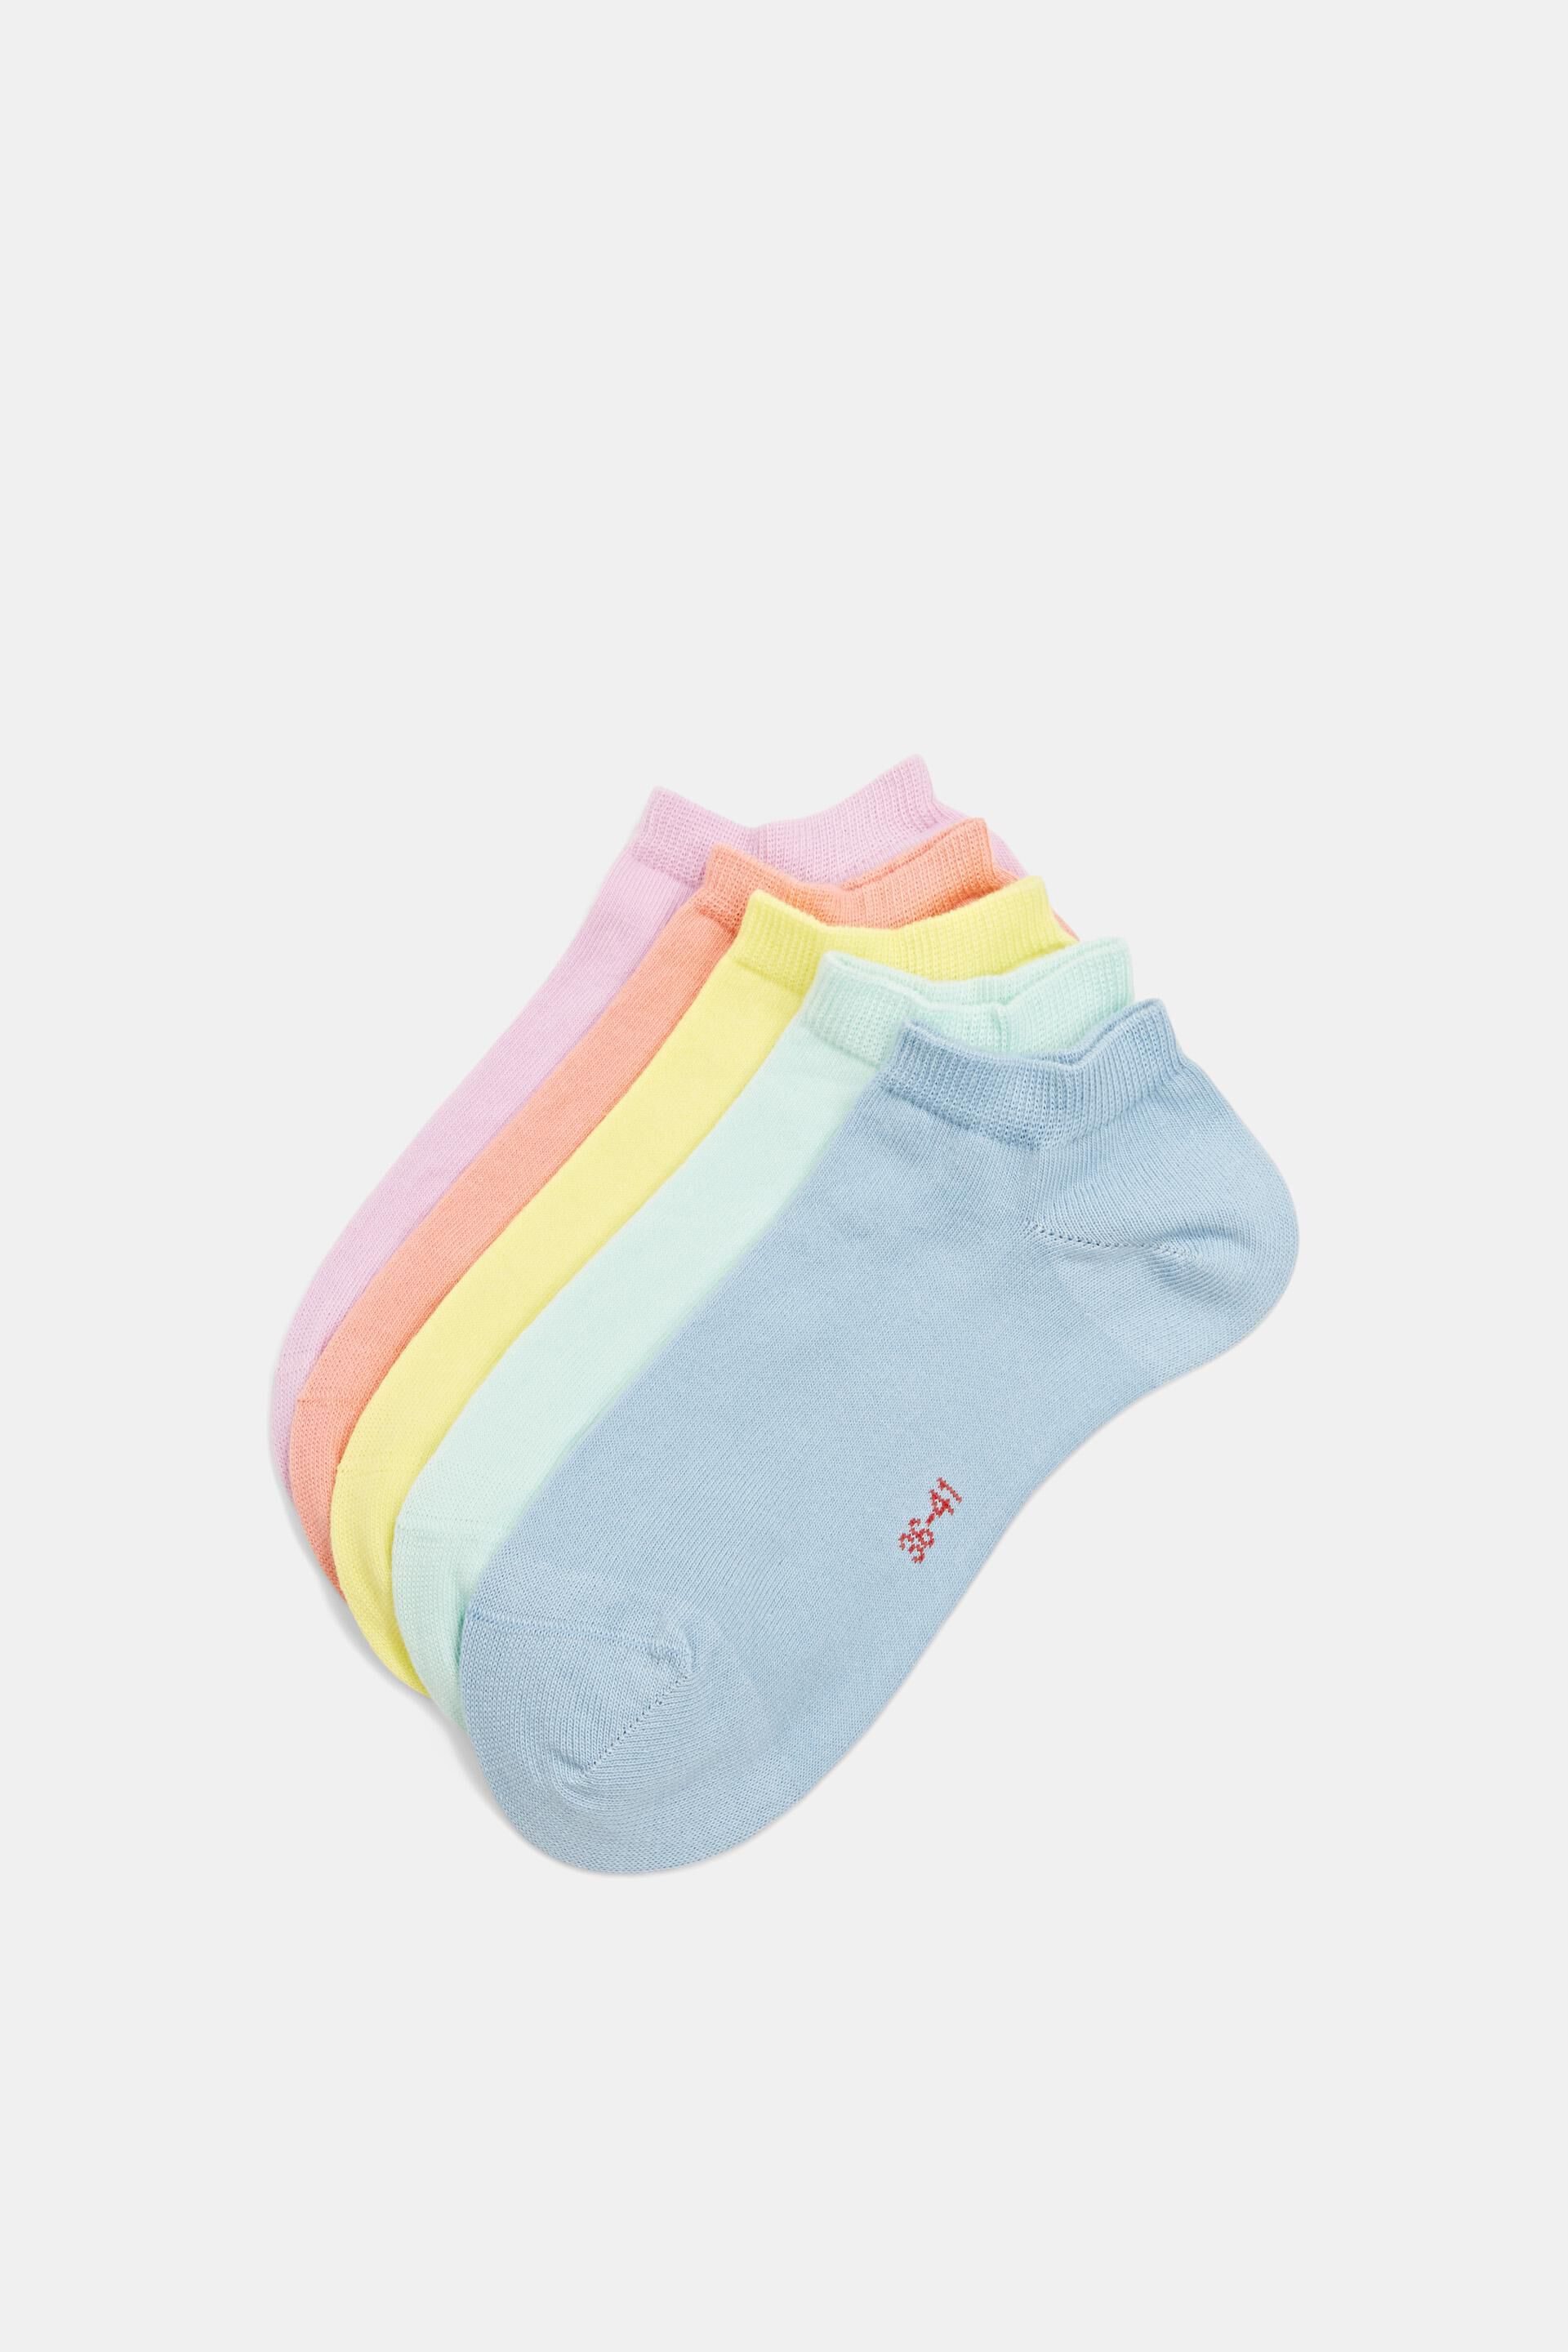 Esprit Online Store Five-pack of sneaker organic socks, blended cotton